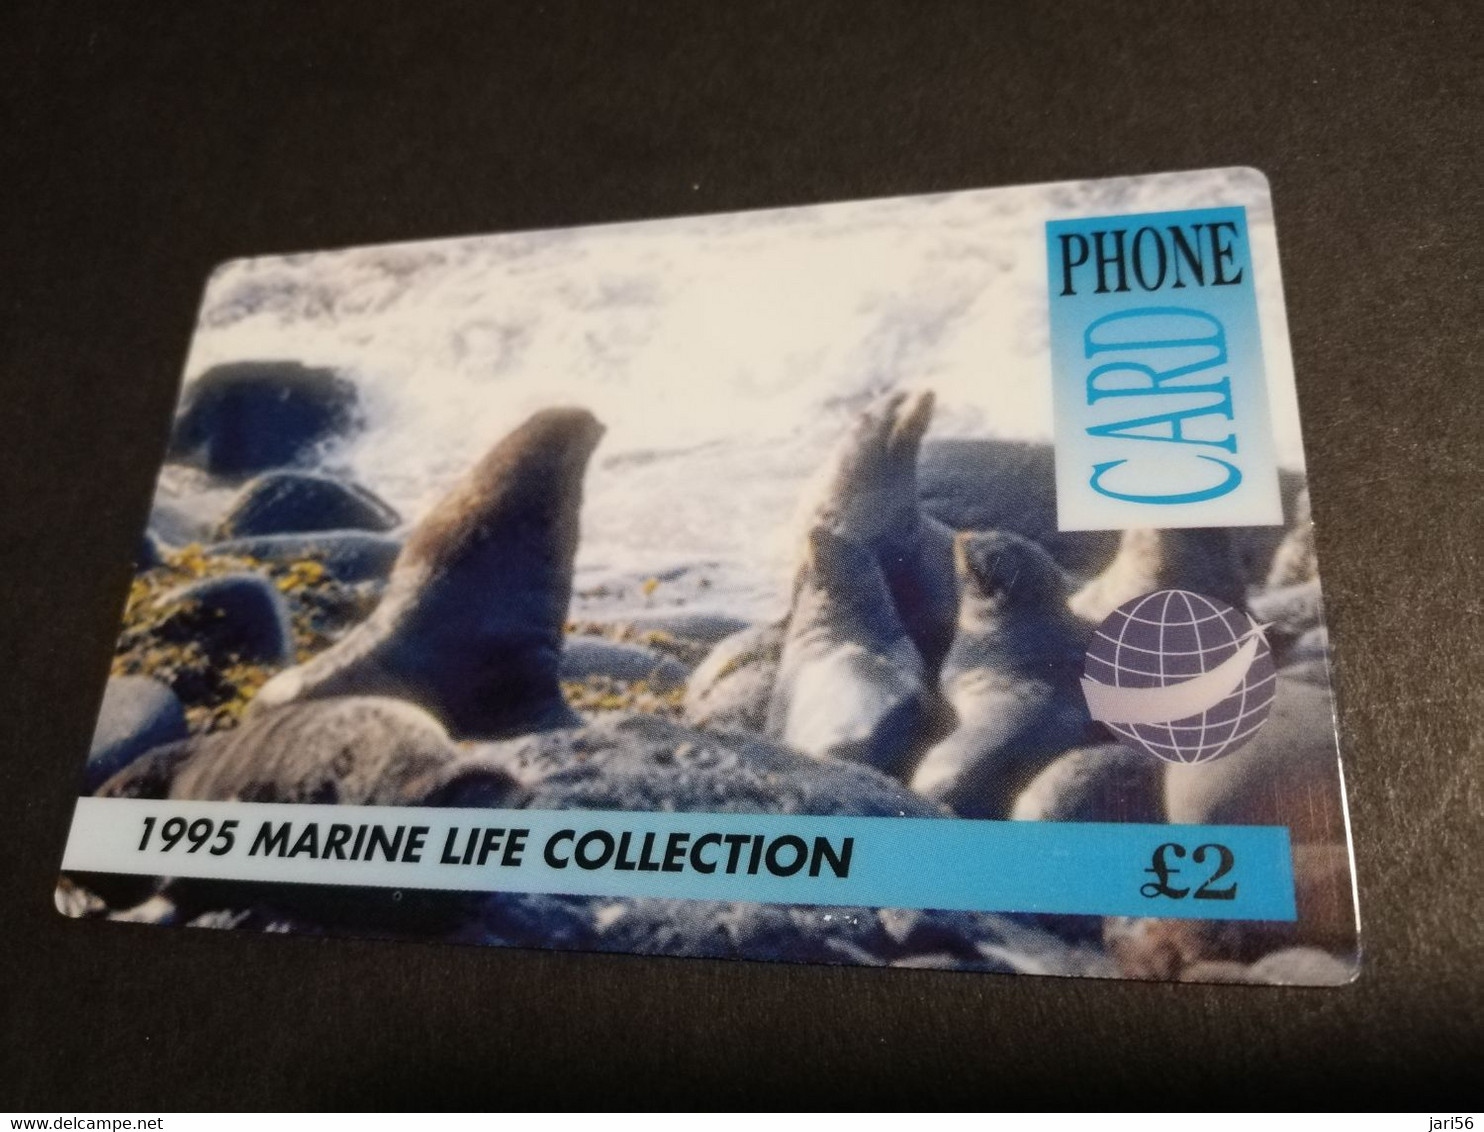 GREAT BRITAIN   2 POUND   MARINE LIFE COLLECTION SEALION     DIT PHONECARD    PREPAID CARD      **5925** - [10] Colecciones